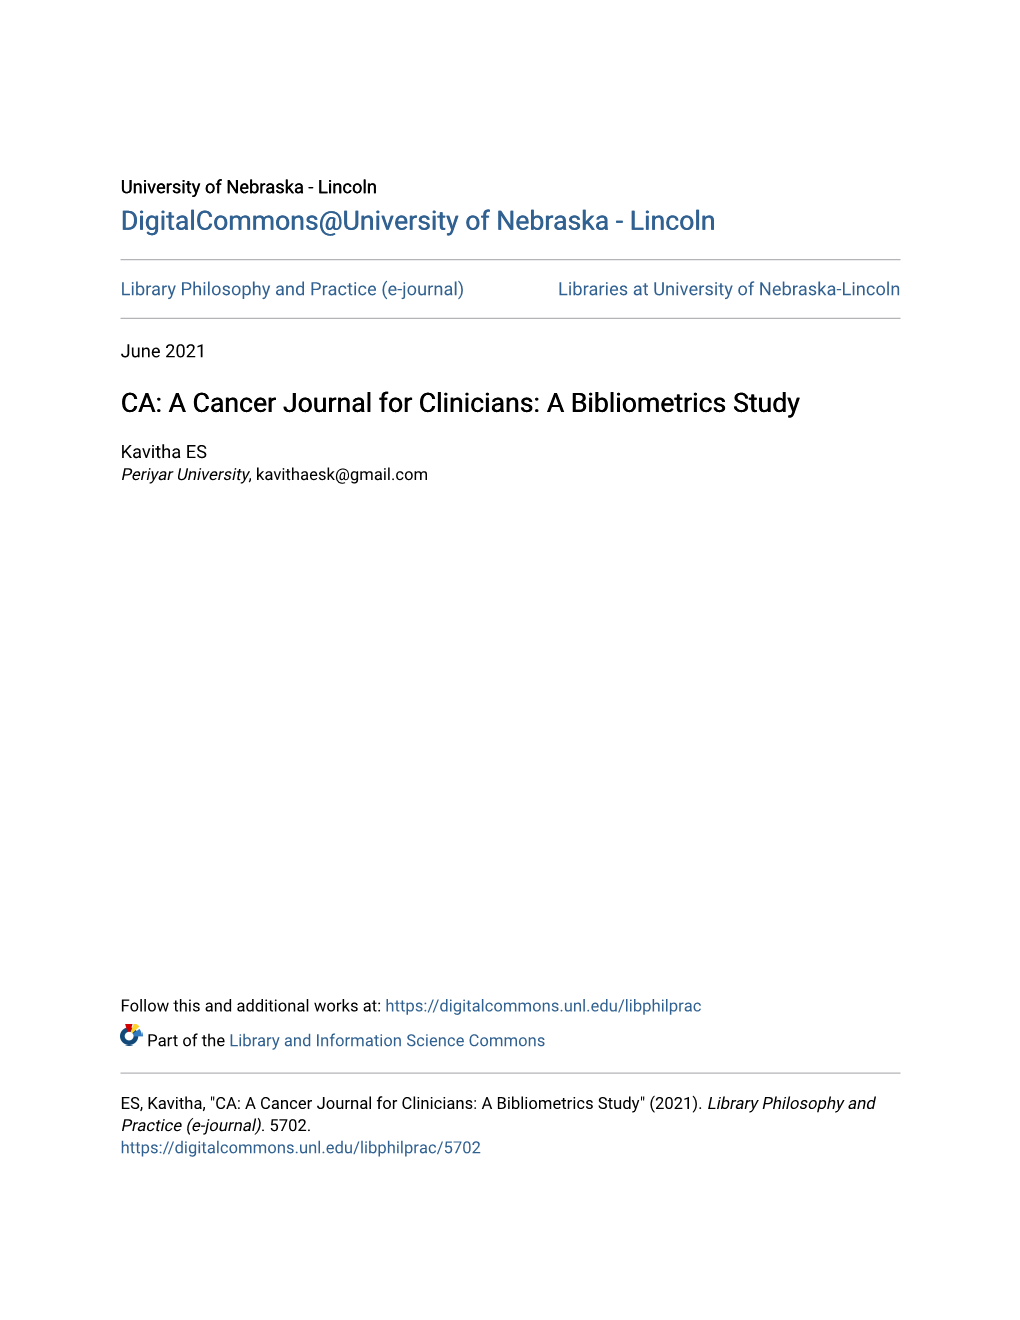 A Cancer Journal for Clinicians: a Bibliometrics Study